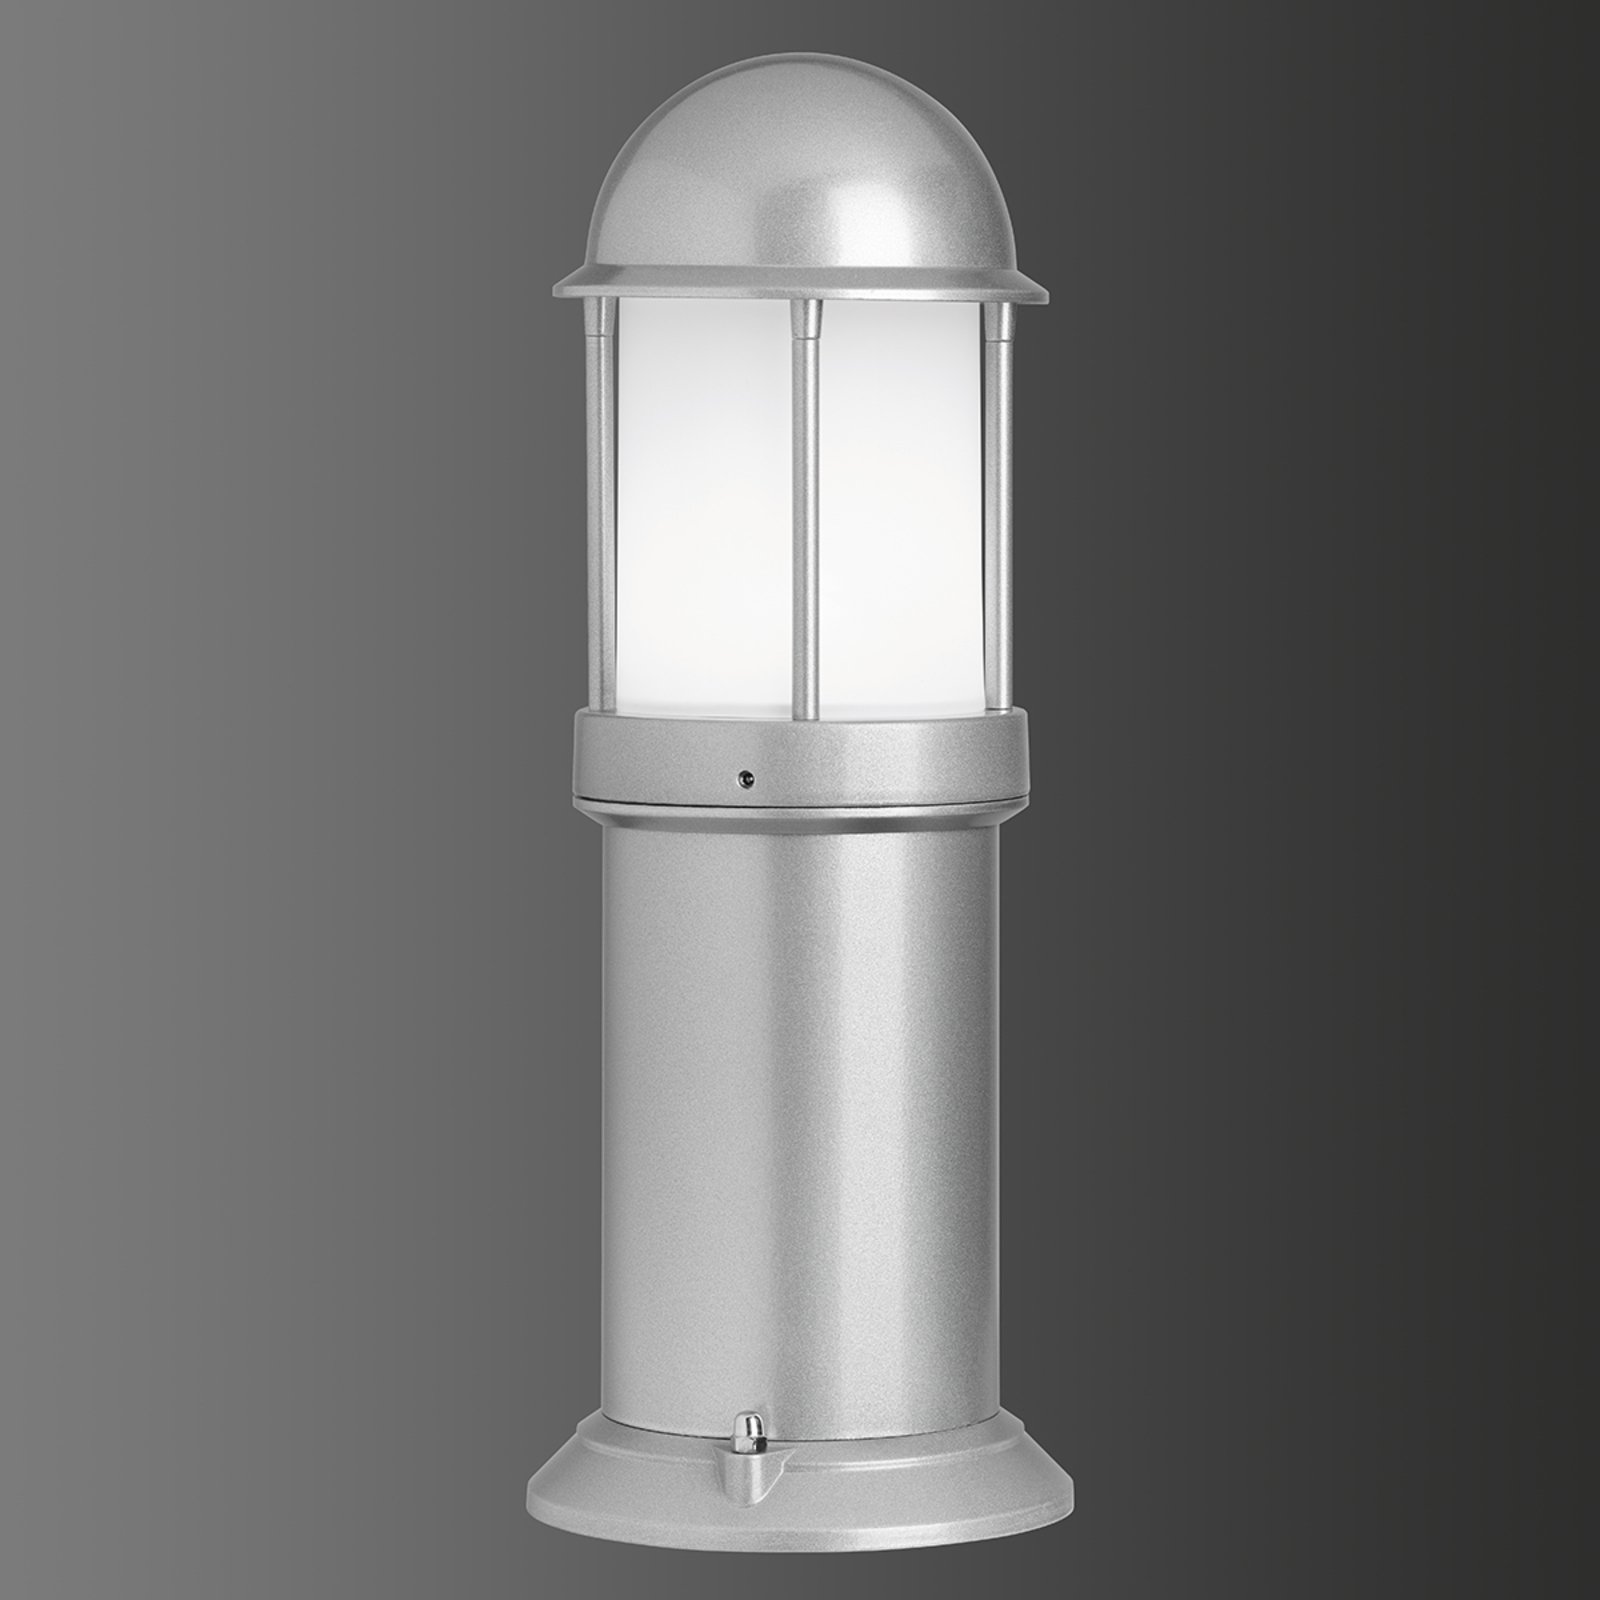 Marco pillar light made of aluminium, silver